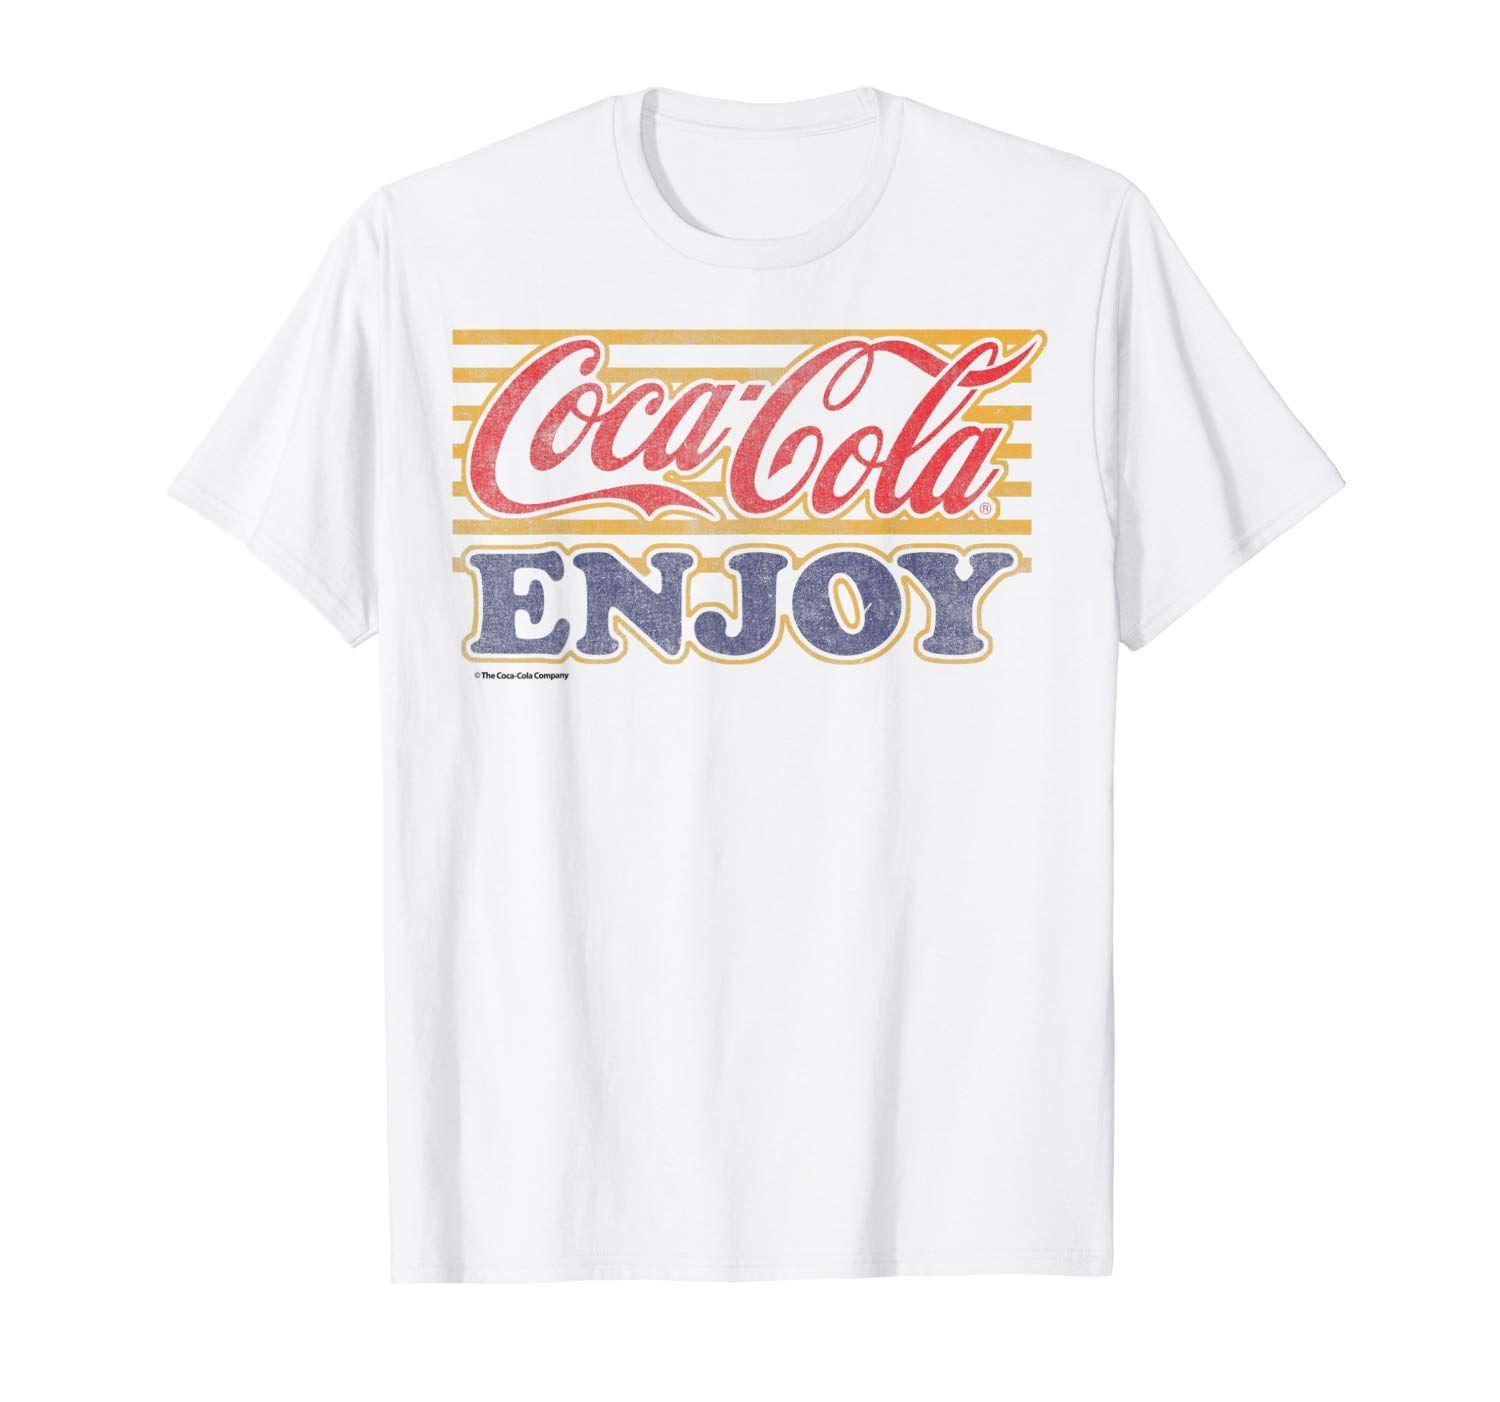 Faded Logo - Amazon.com: Coca-Cola Vintage Faded Enjoy Logo Graphic T-Shirt: Clothing